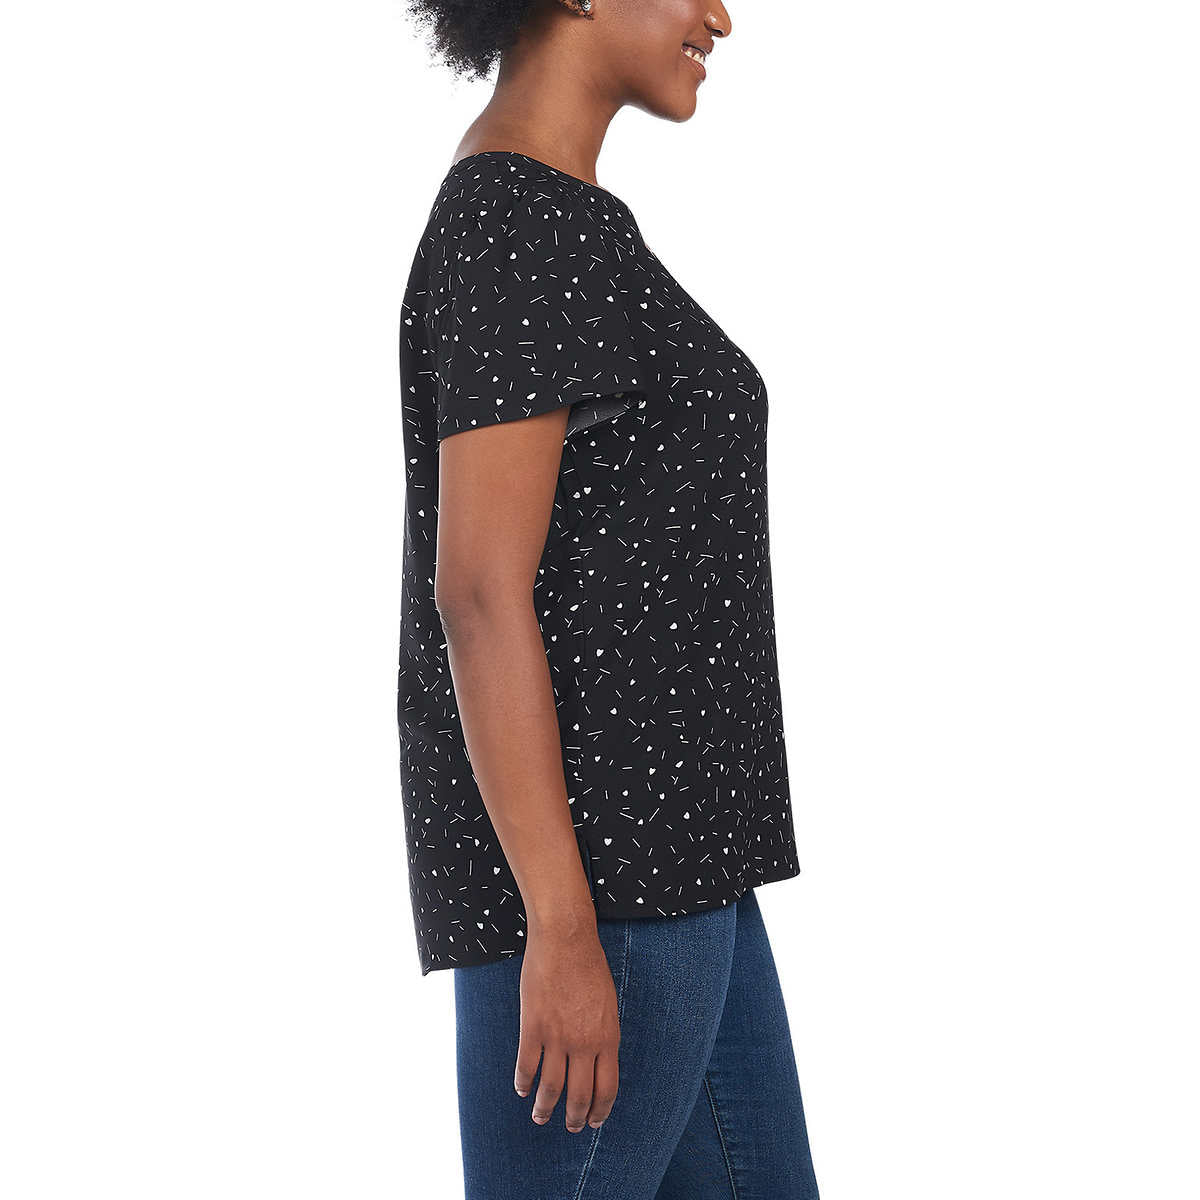 Hilary Radley Women's V-Neck Flutter Sleeves Lightweight Printed Blouse Top